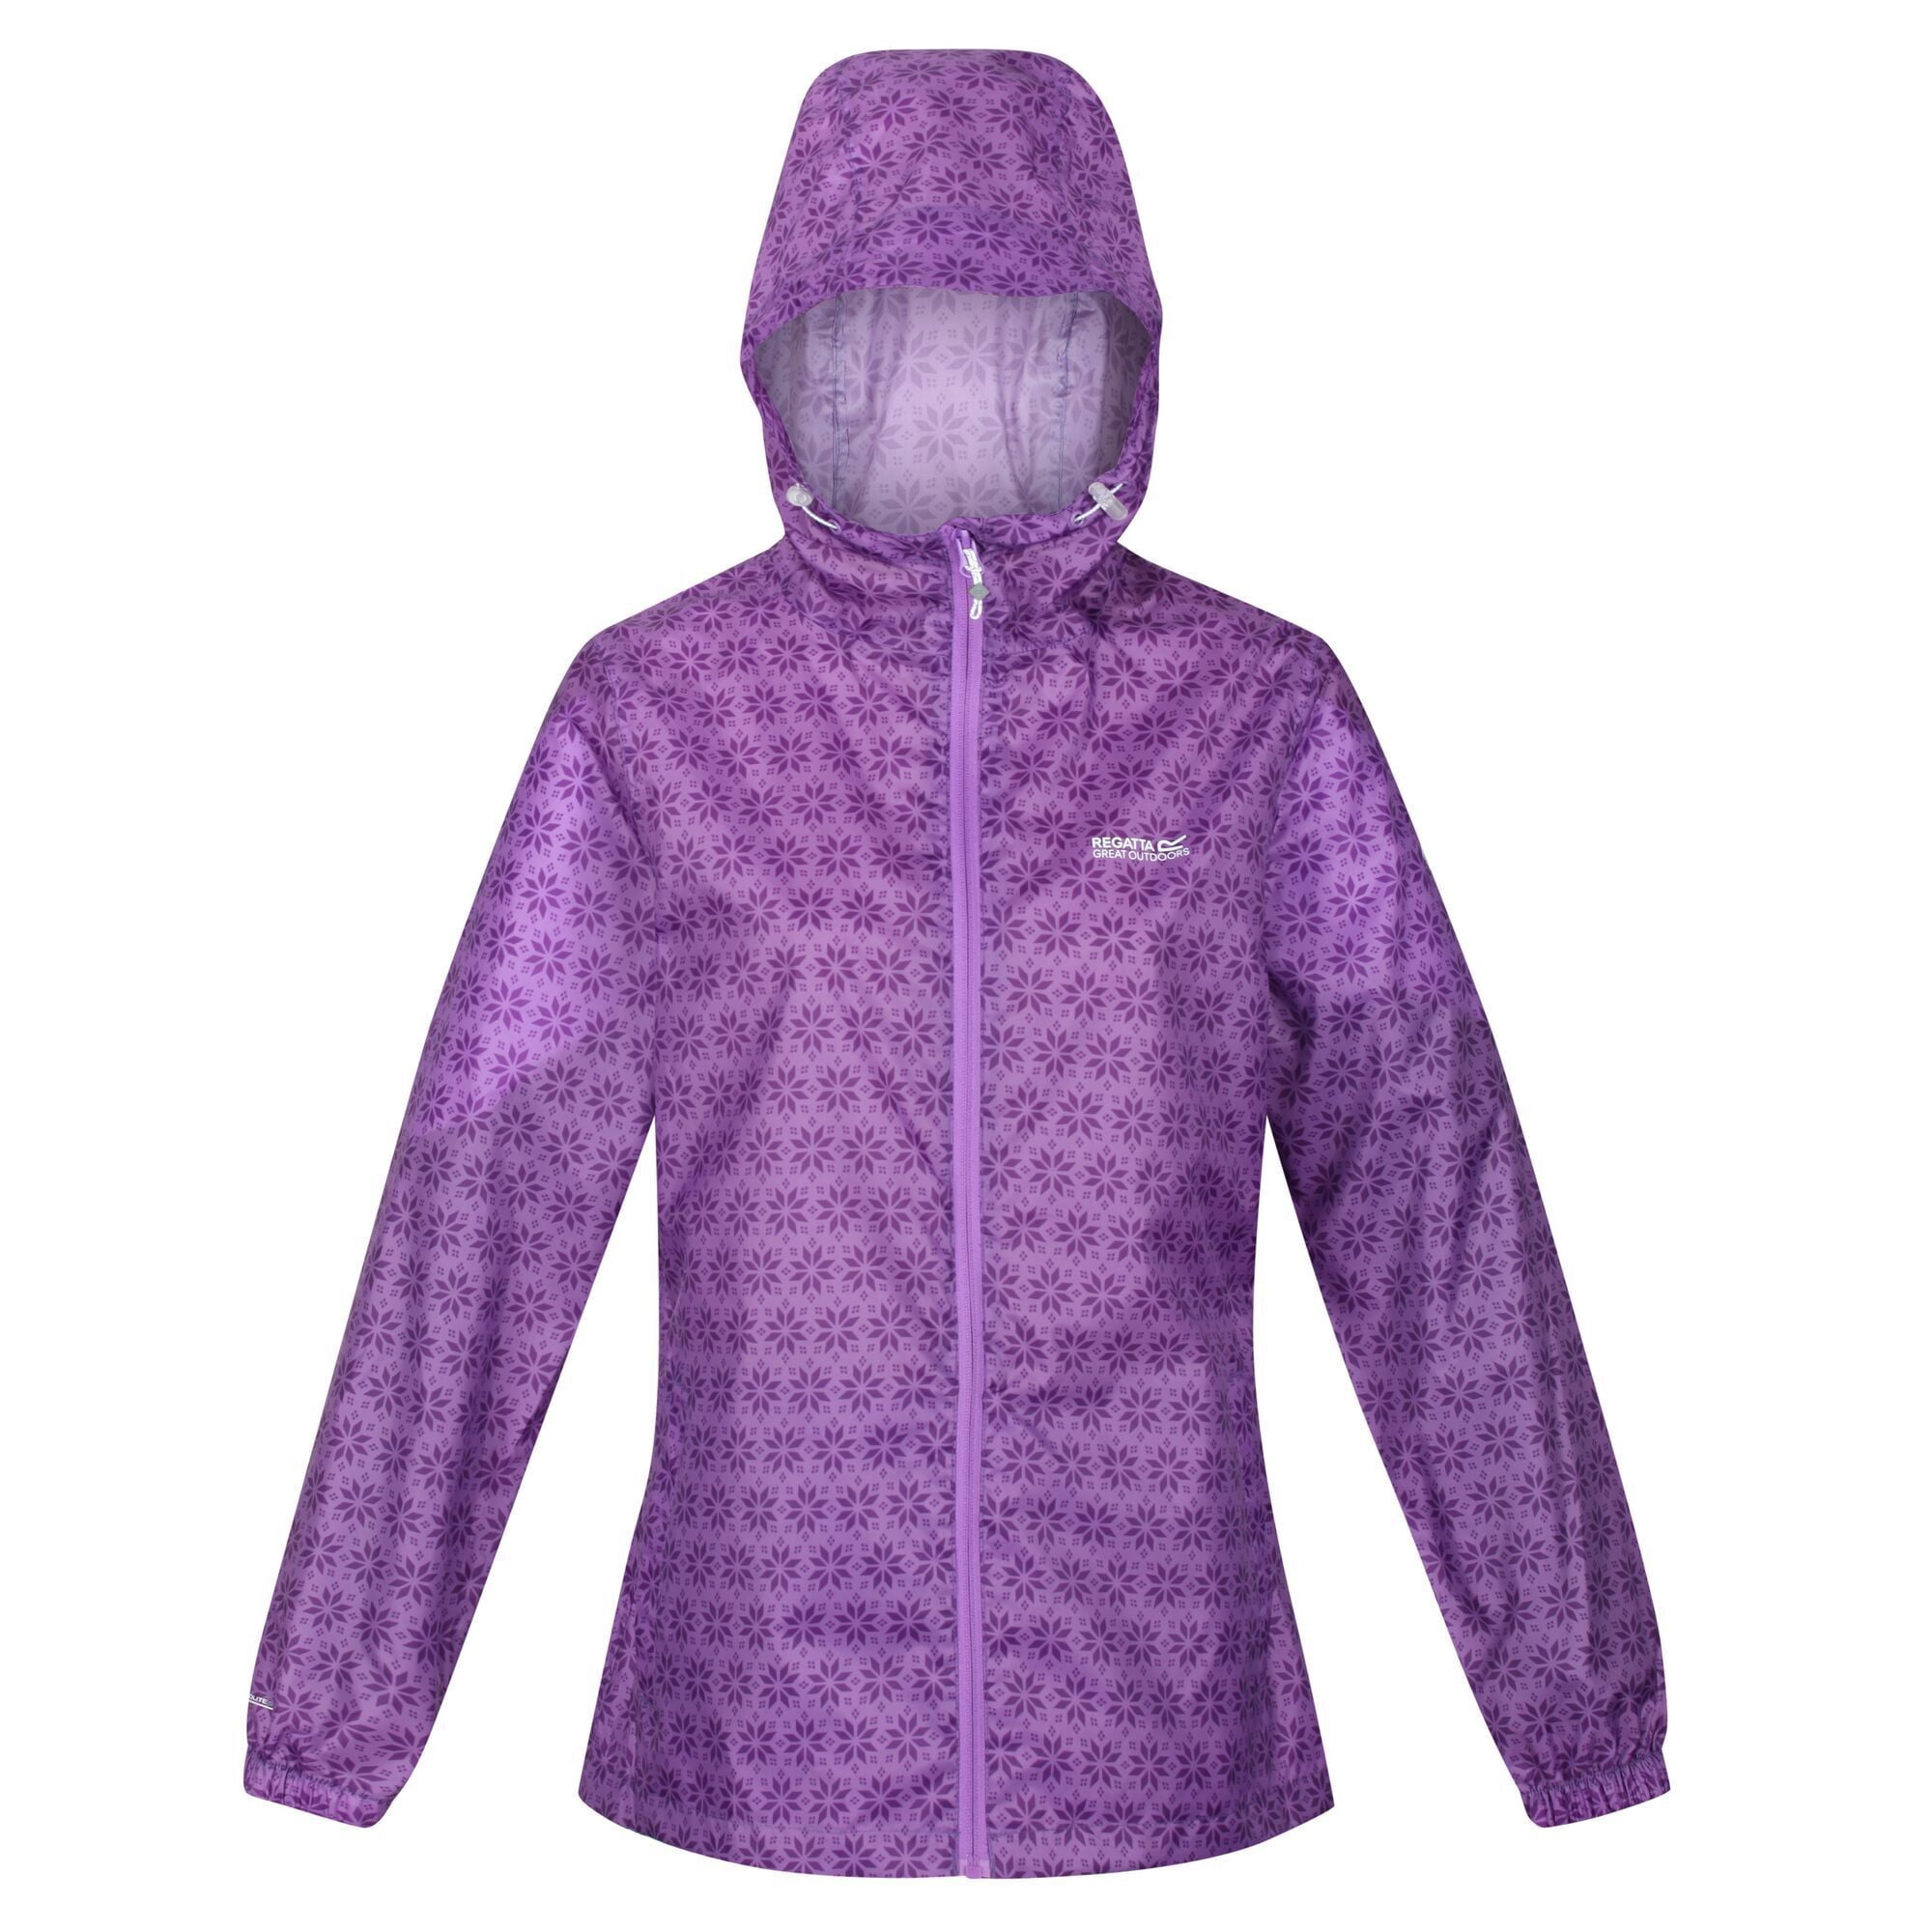 LADIES S-XXL 100% WATERPROOF WINDPROOF JACKET zip up hooded kagool Purple coat 